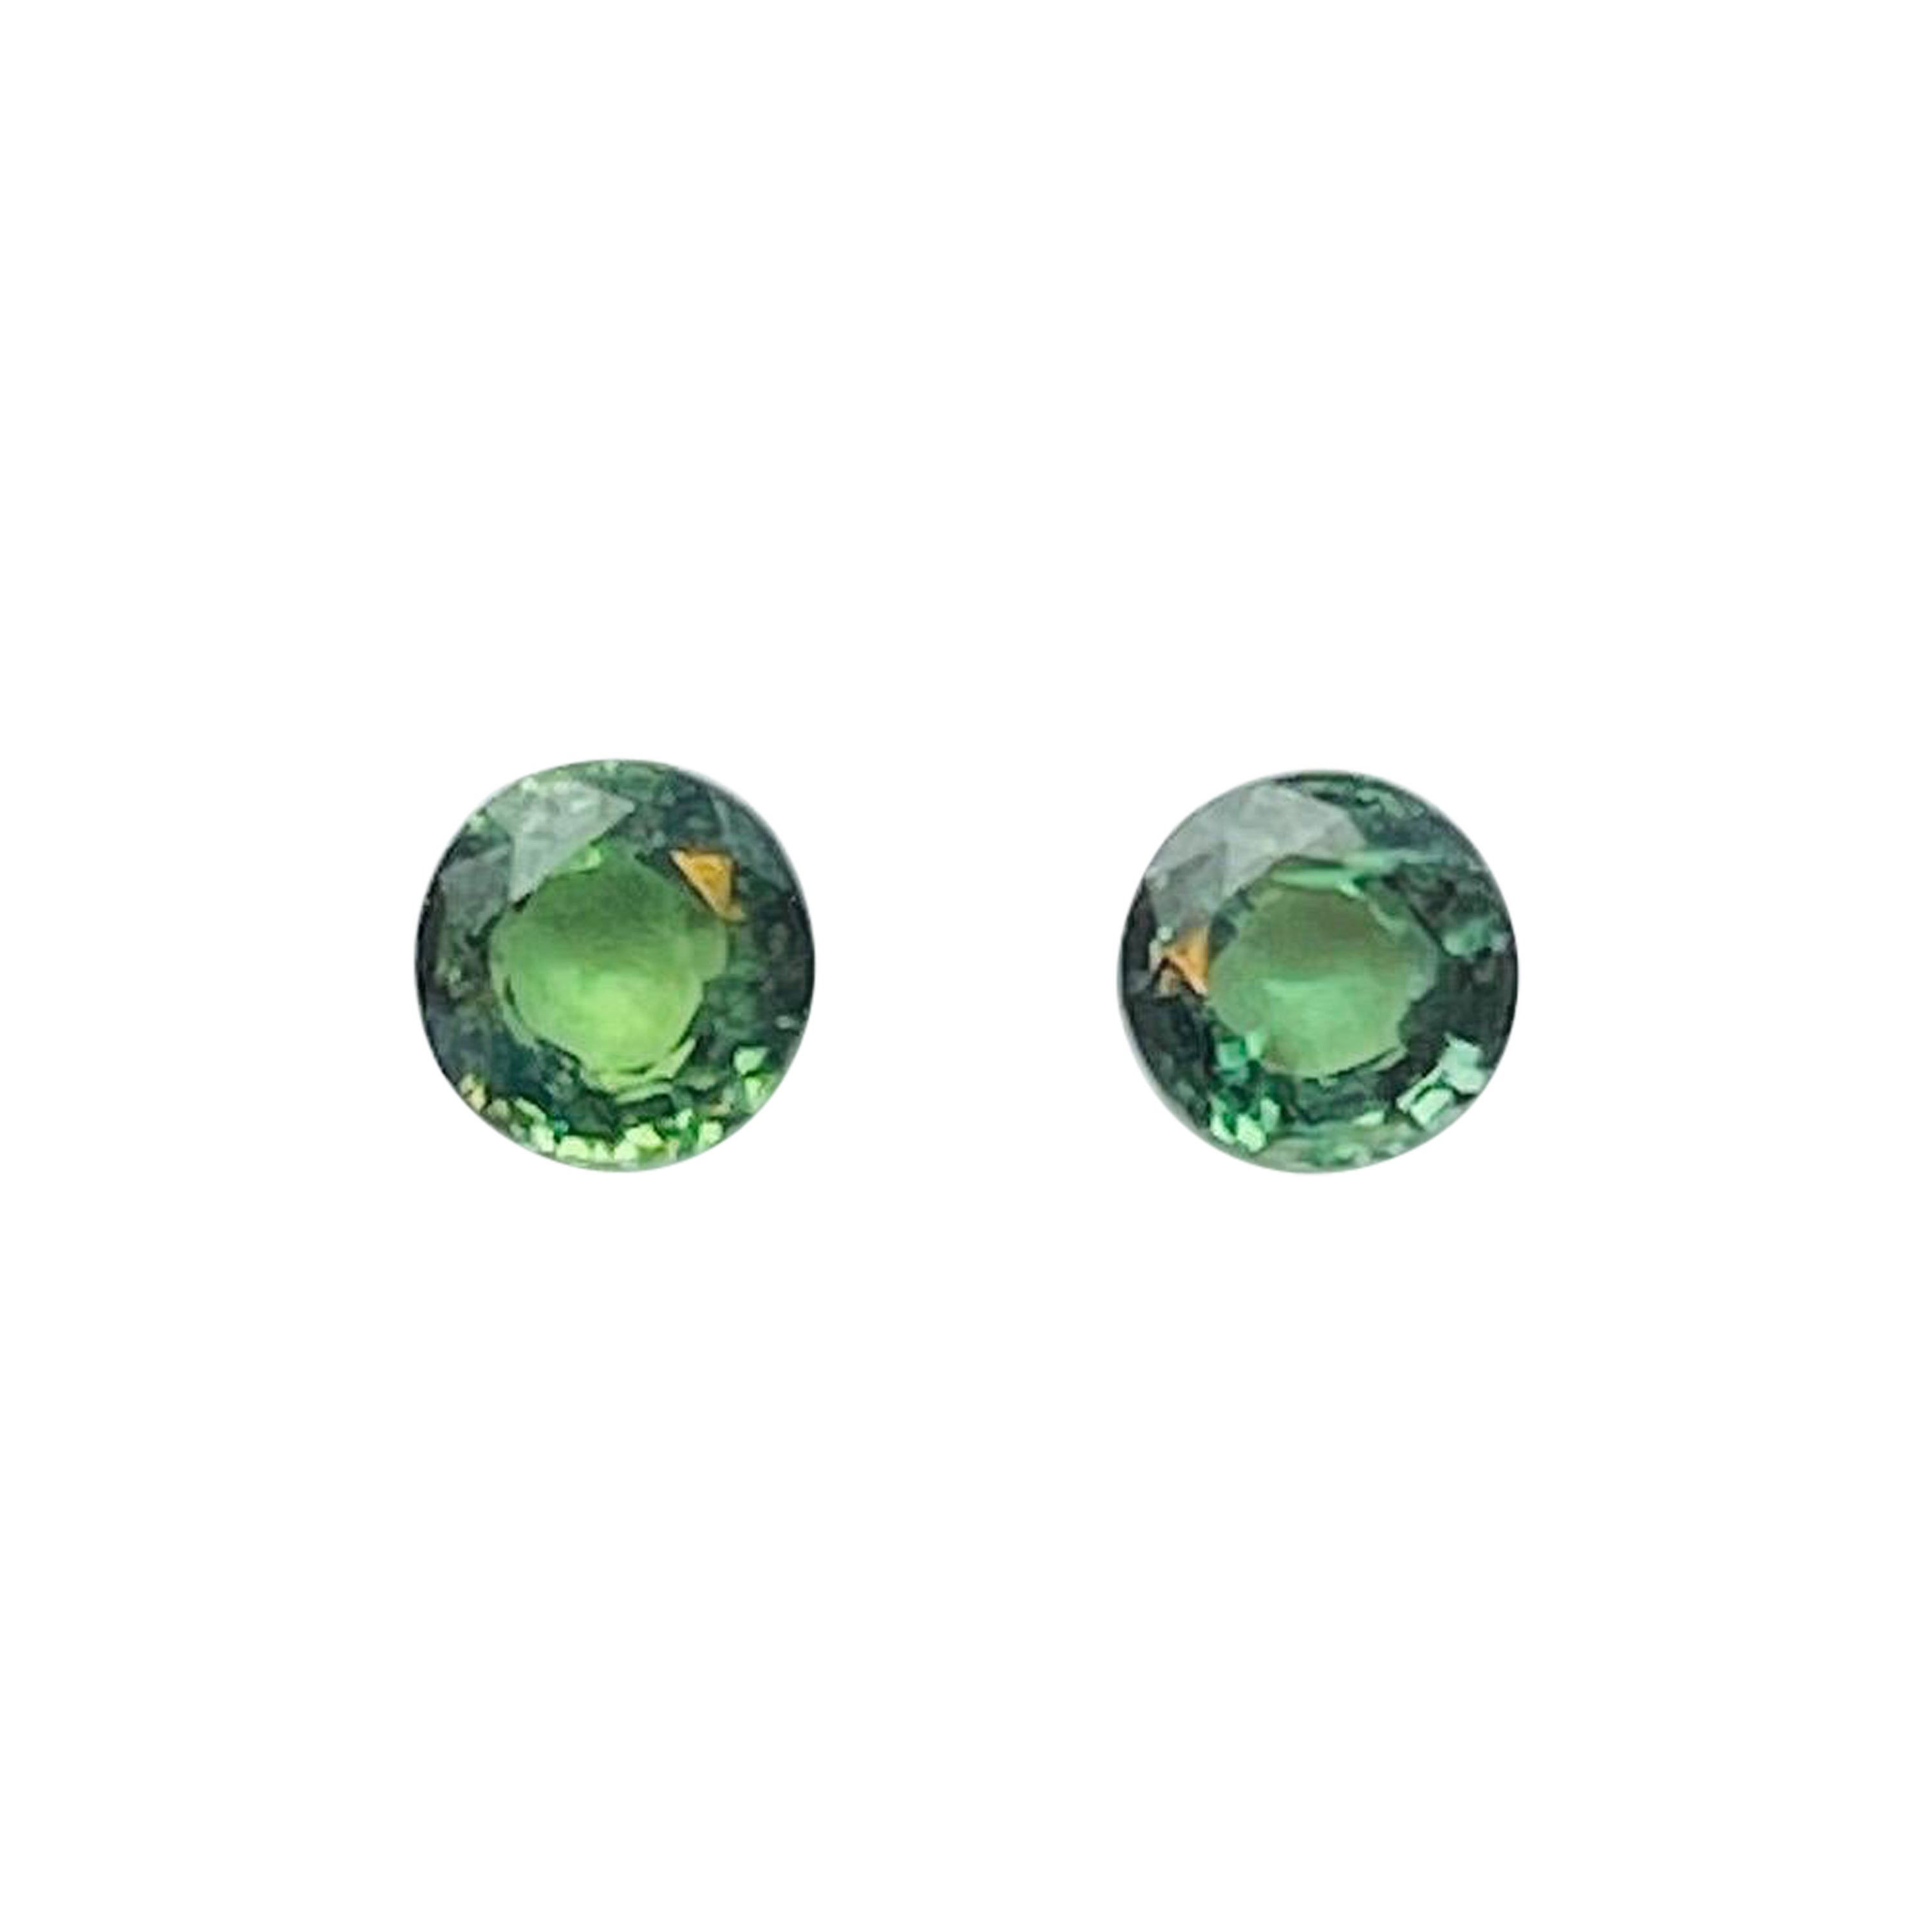 0.46ct pair Alexandrite Green to orange pink eye clean quality rare gemstone For Sale